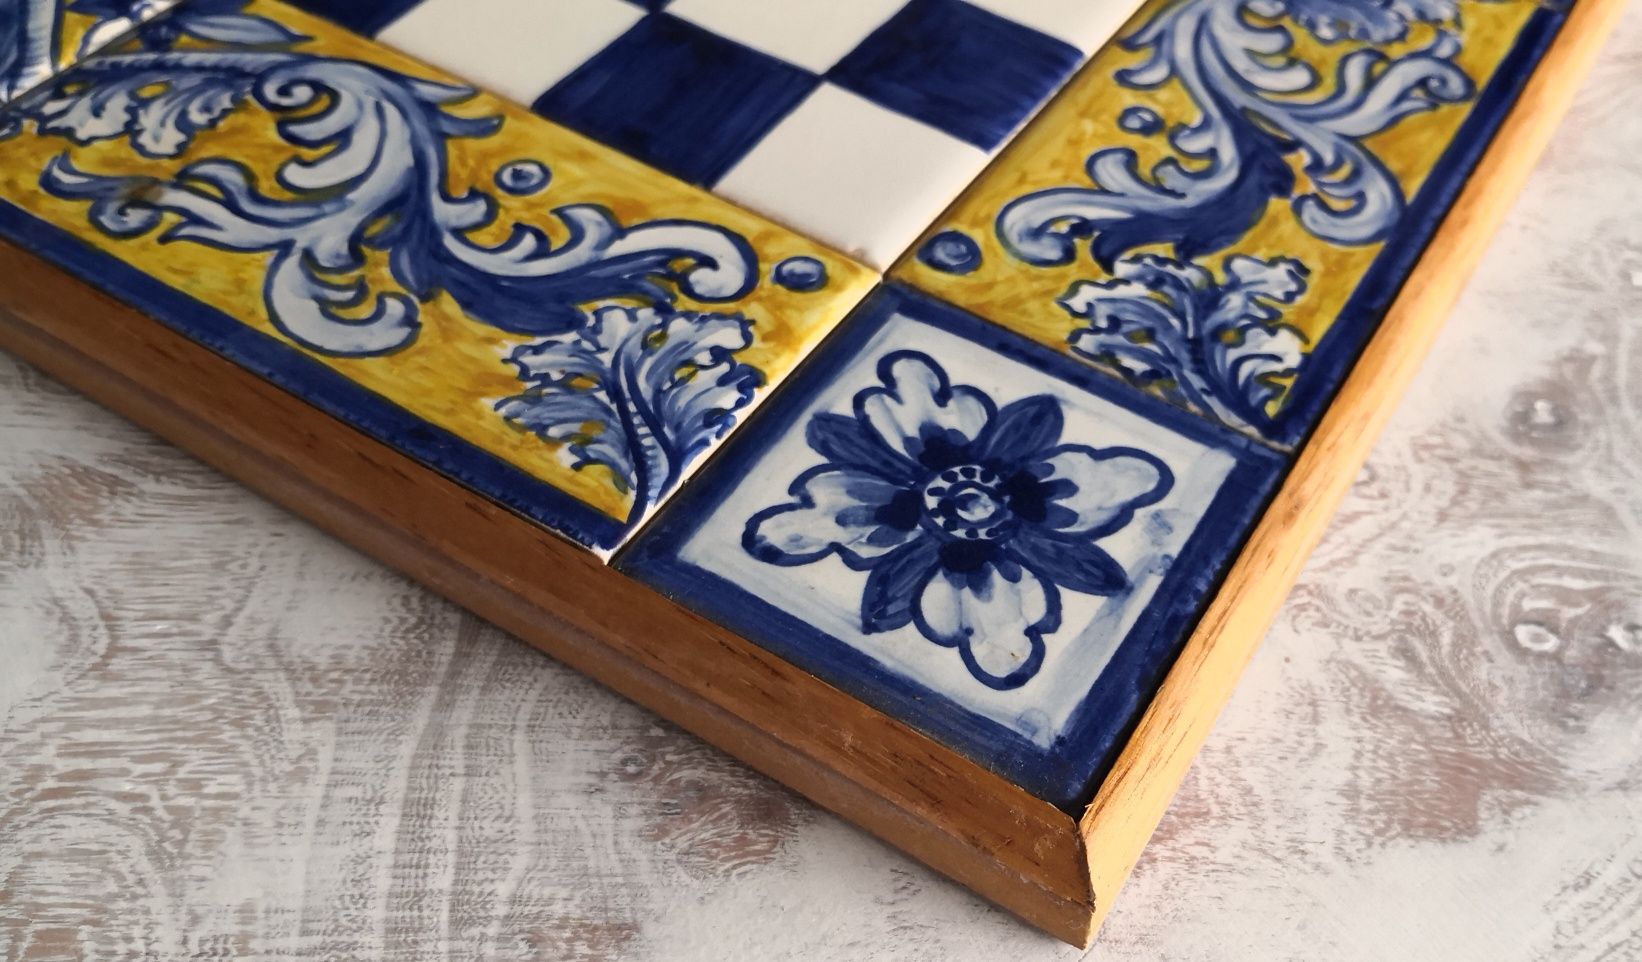 Tabuleiro de Xadrez em azulejos